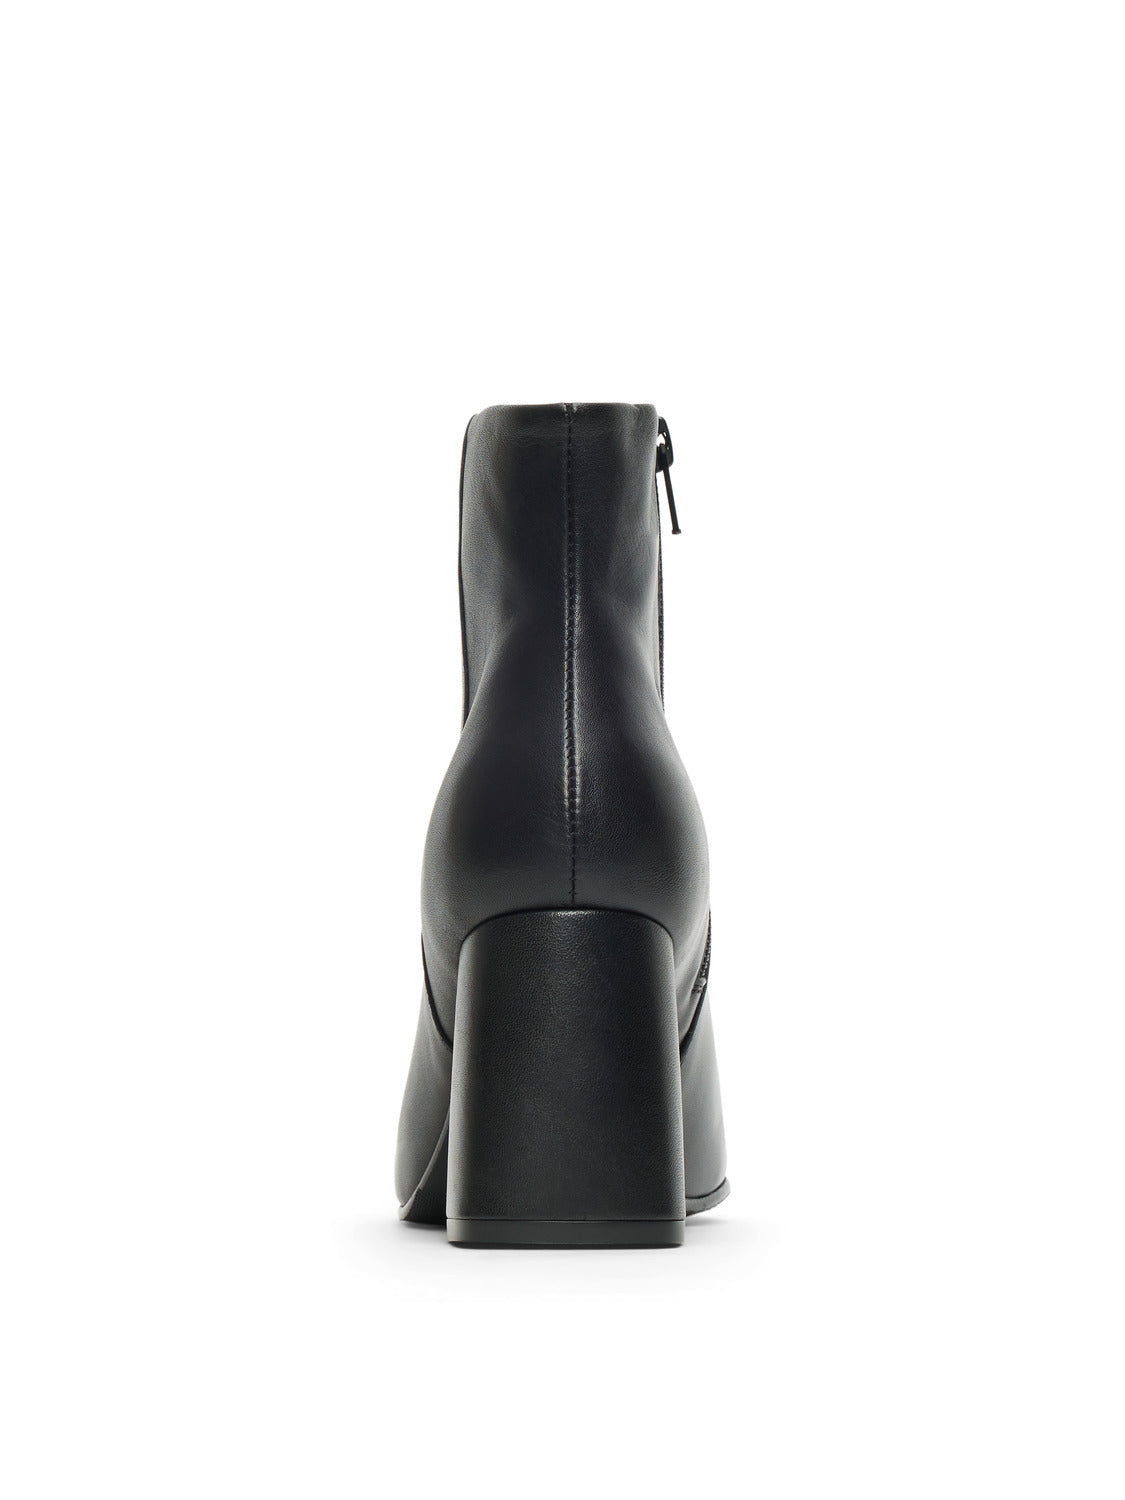 SLFALVA Boots - Black